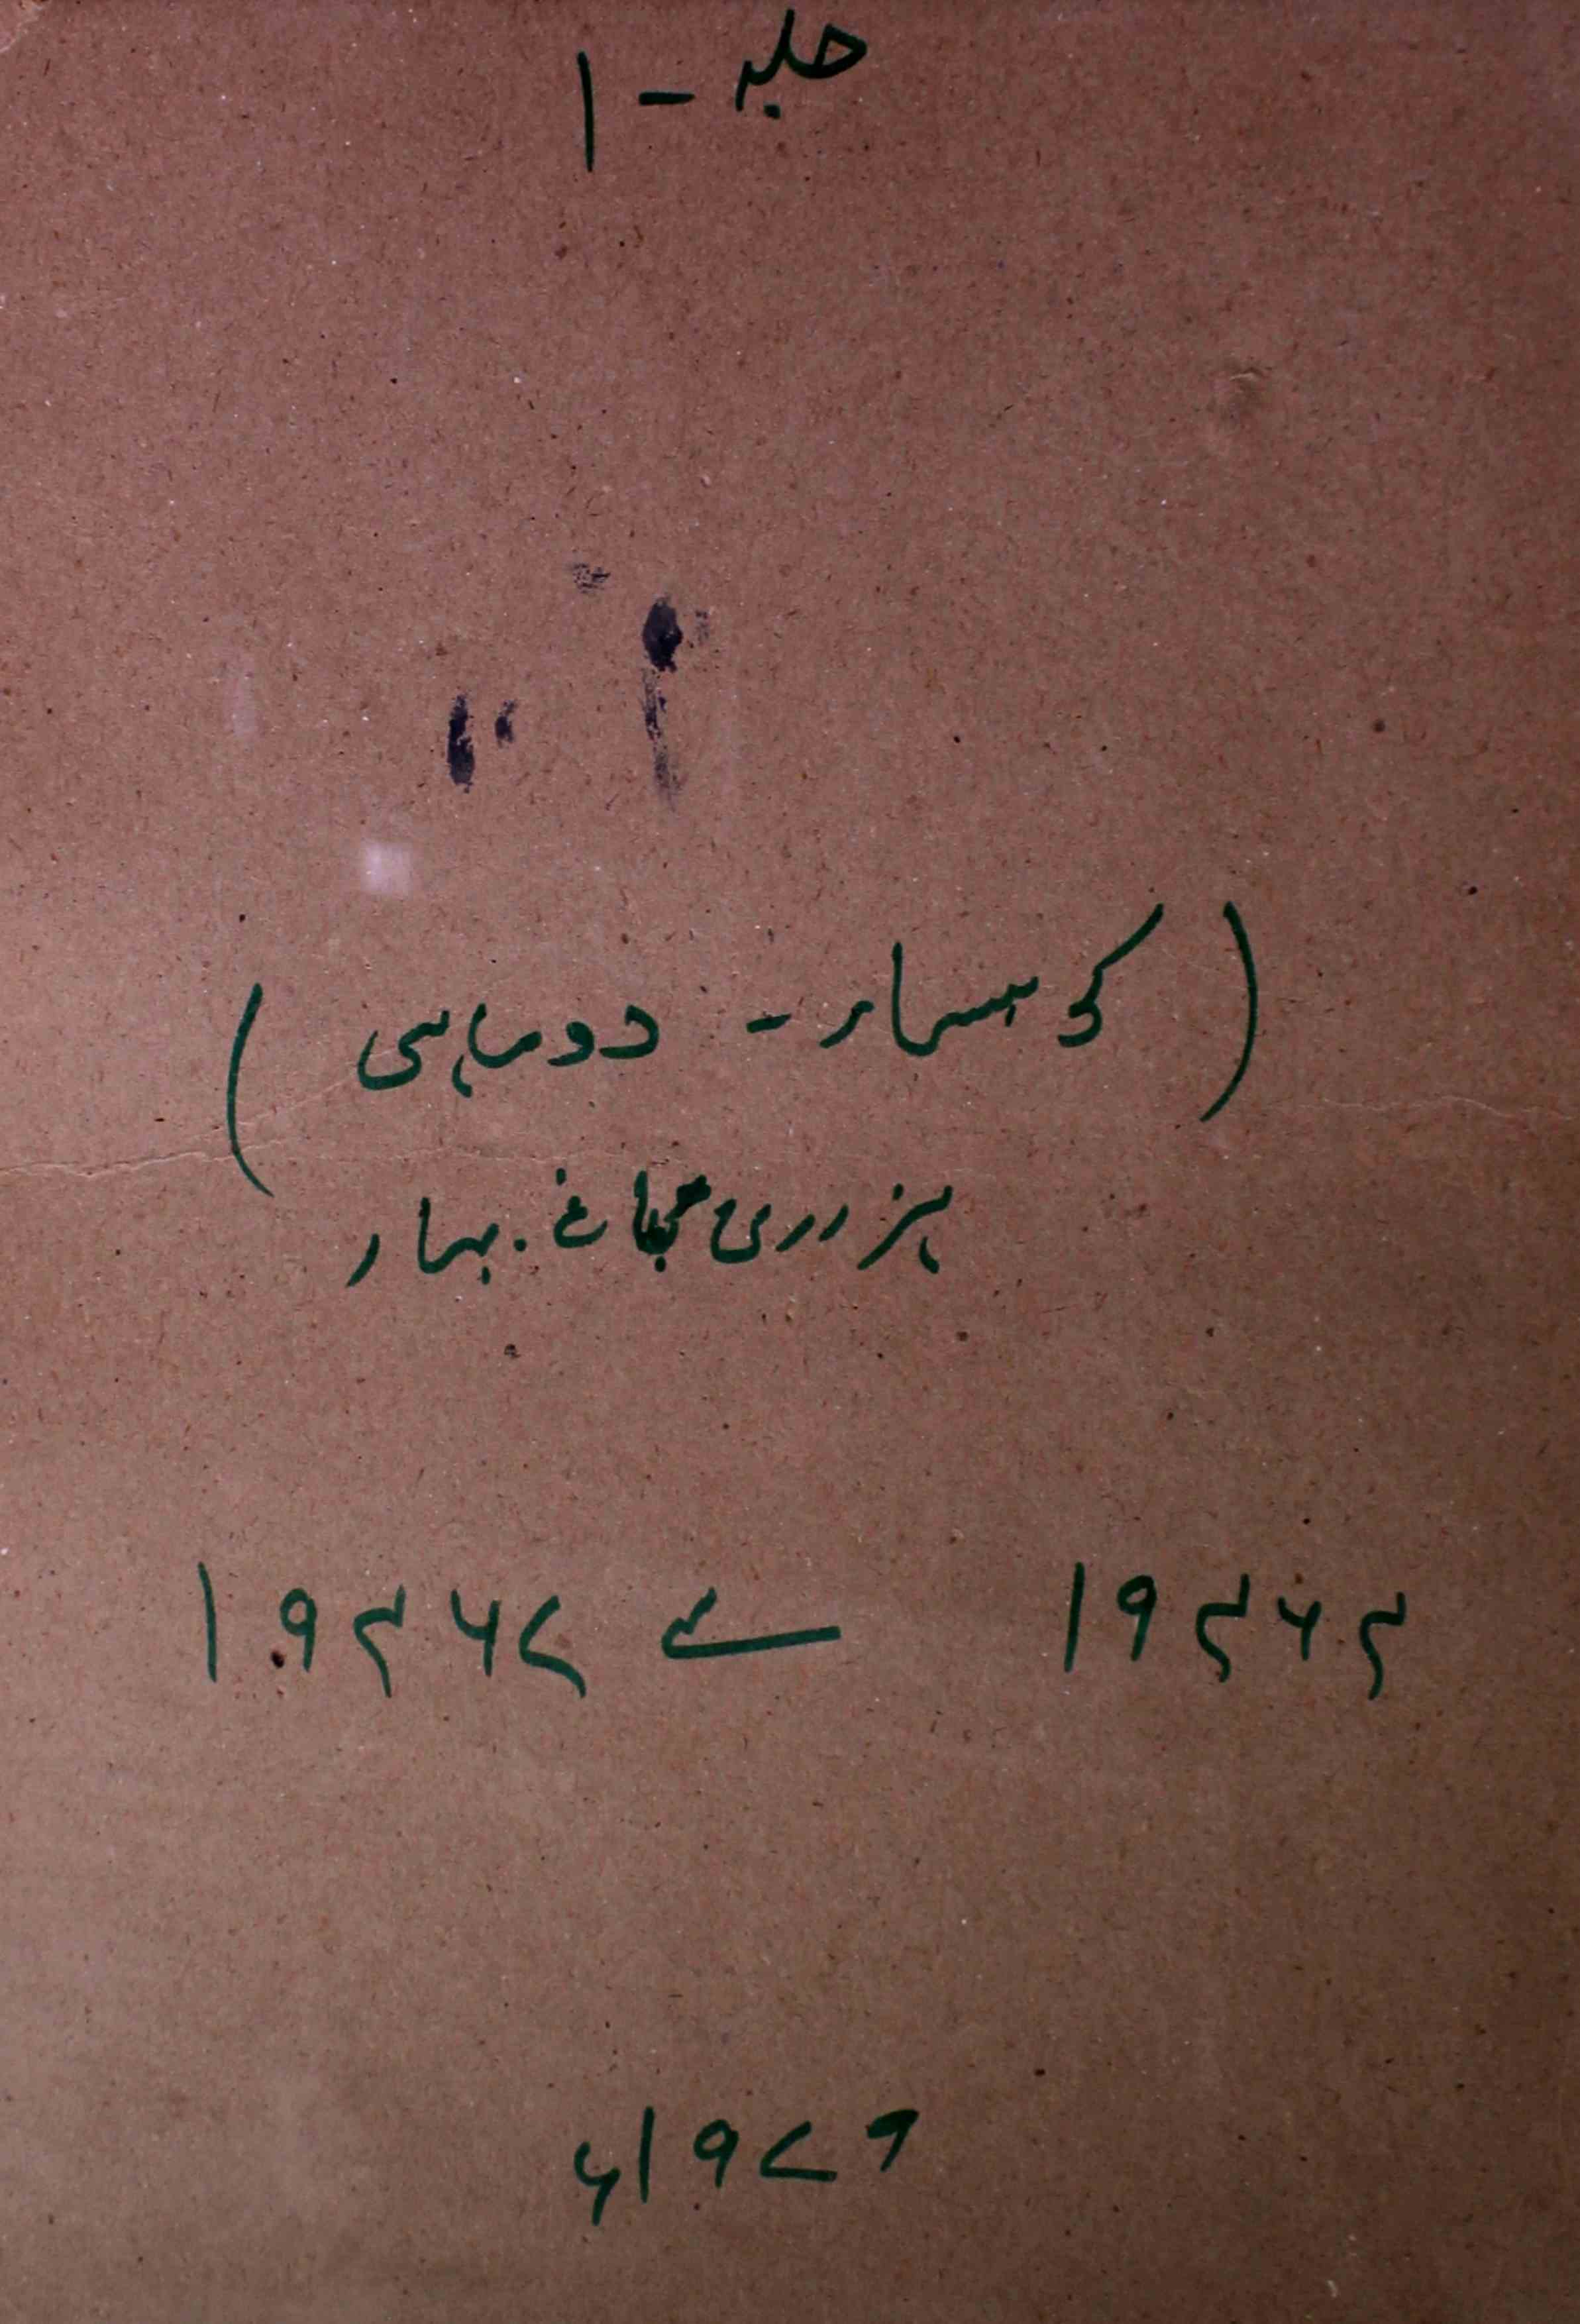 Kohsaar Jild 1 No 1 January 1979-SVK-Shumara Number-001